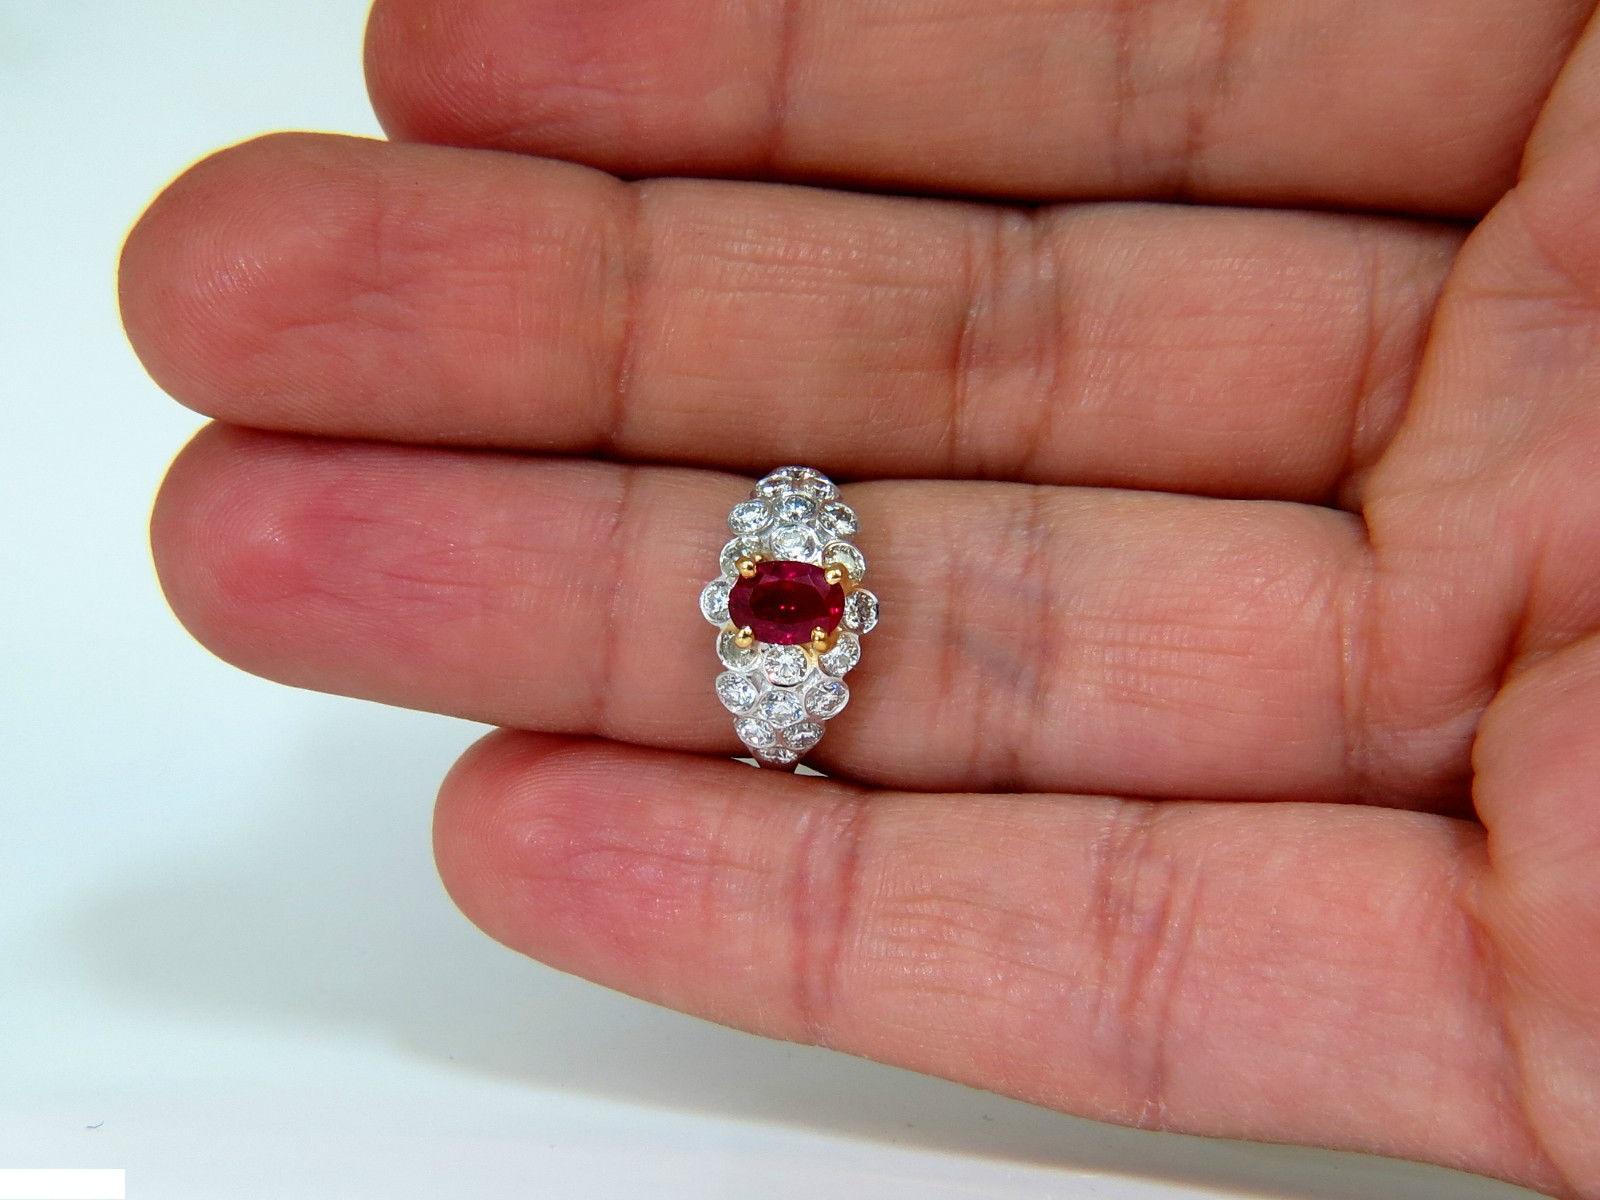 Oval Cut 1.96 Carat Vivid Top Gem Natural Bright Red Ruby Diamond Ring 14 Karat